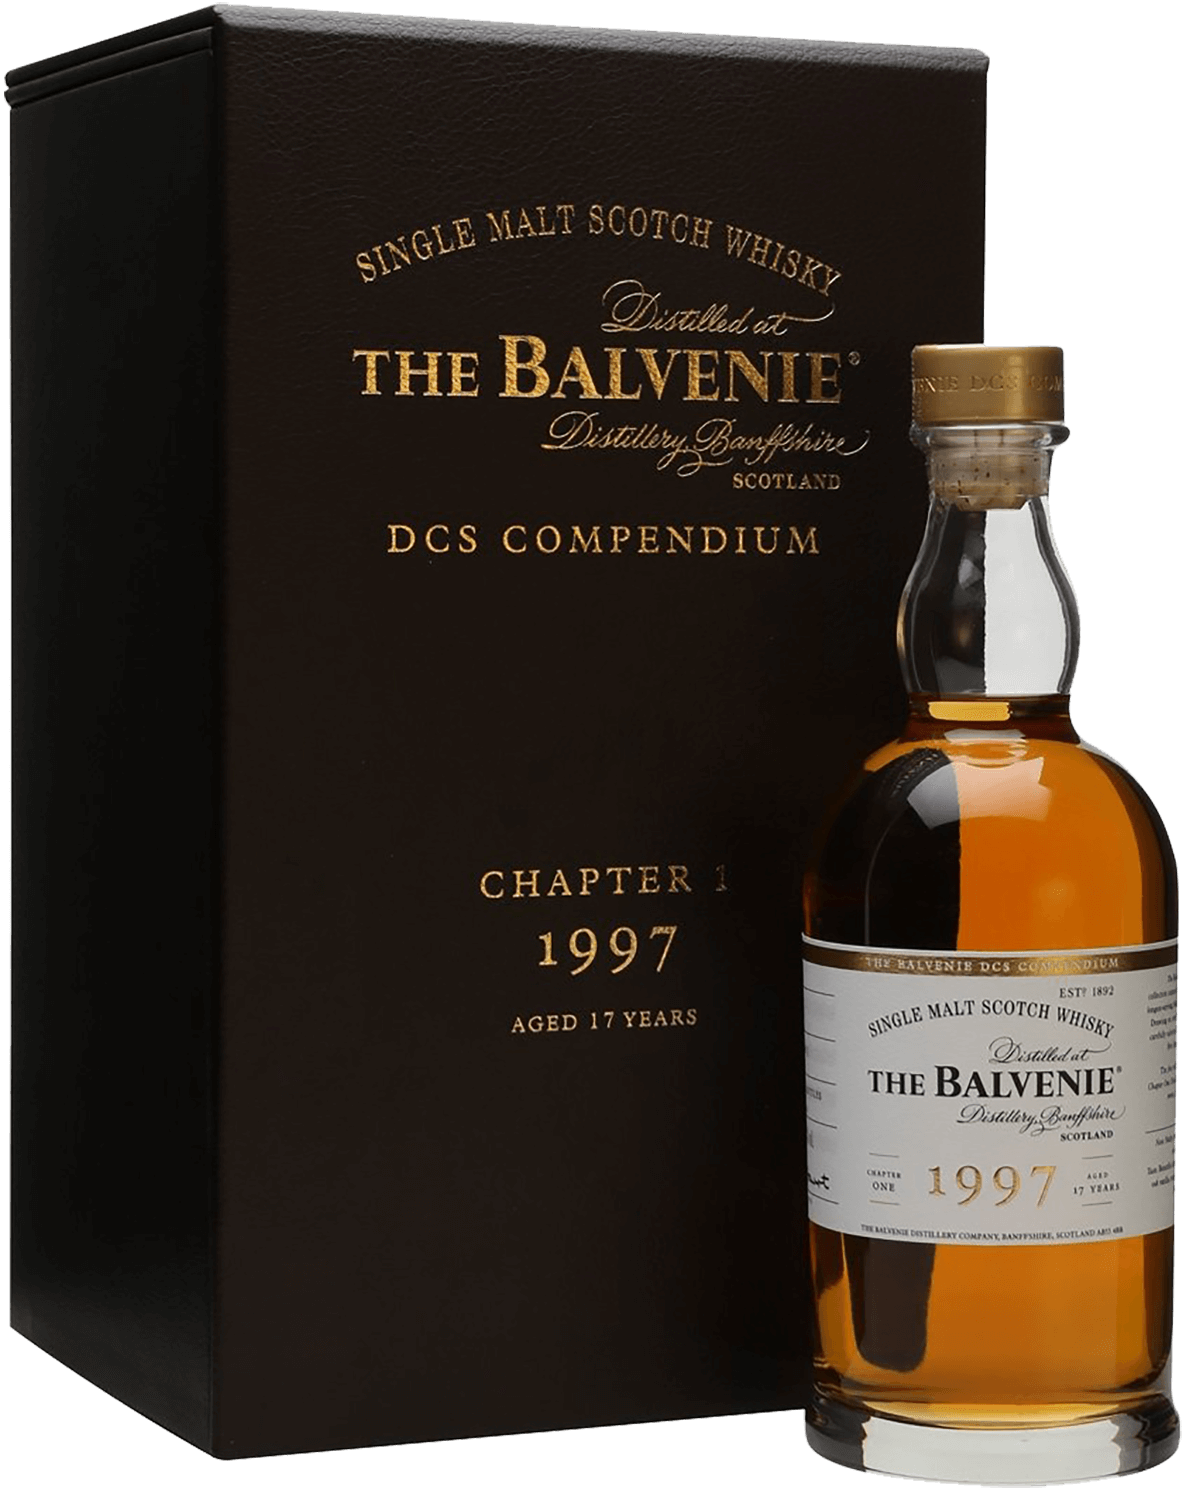 The Balvenie 1997 Single Malt Scotch Whisky (gift box)